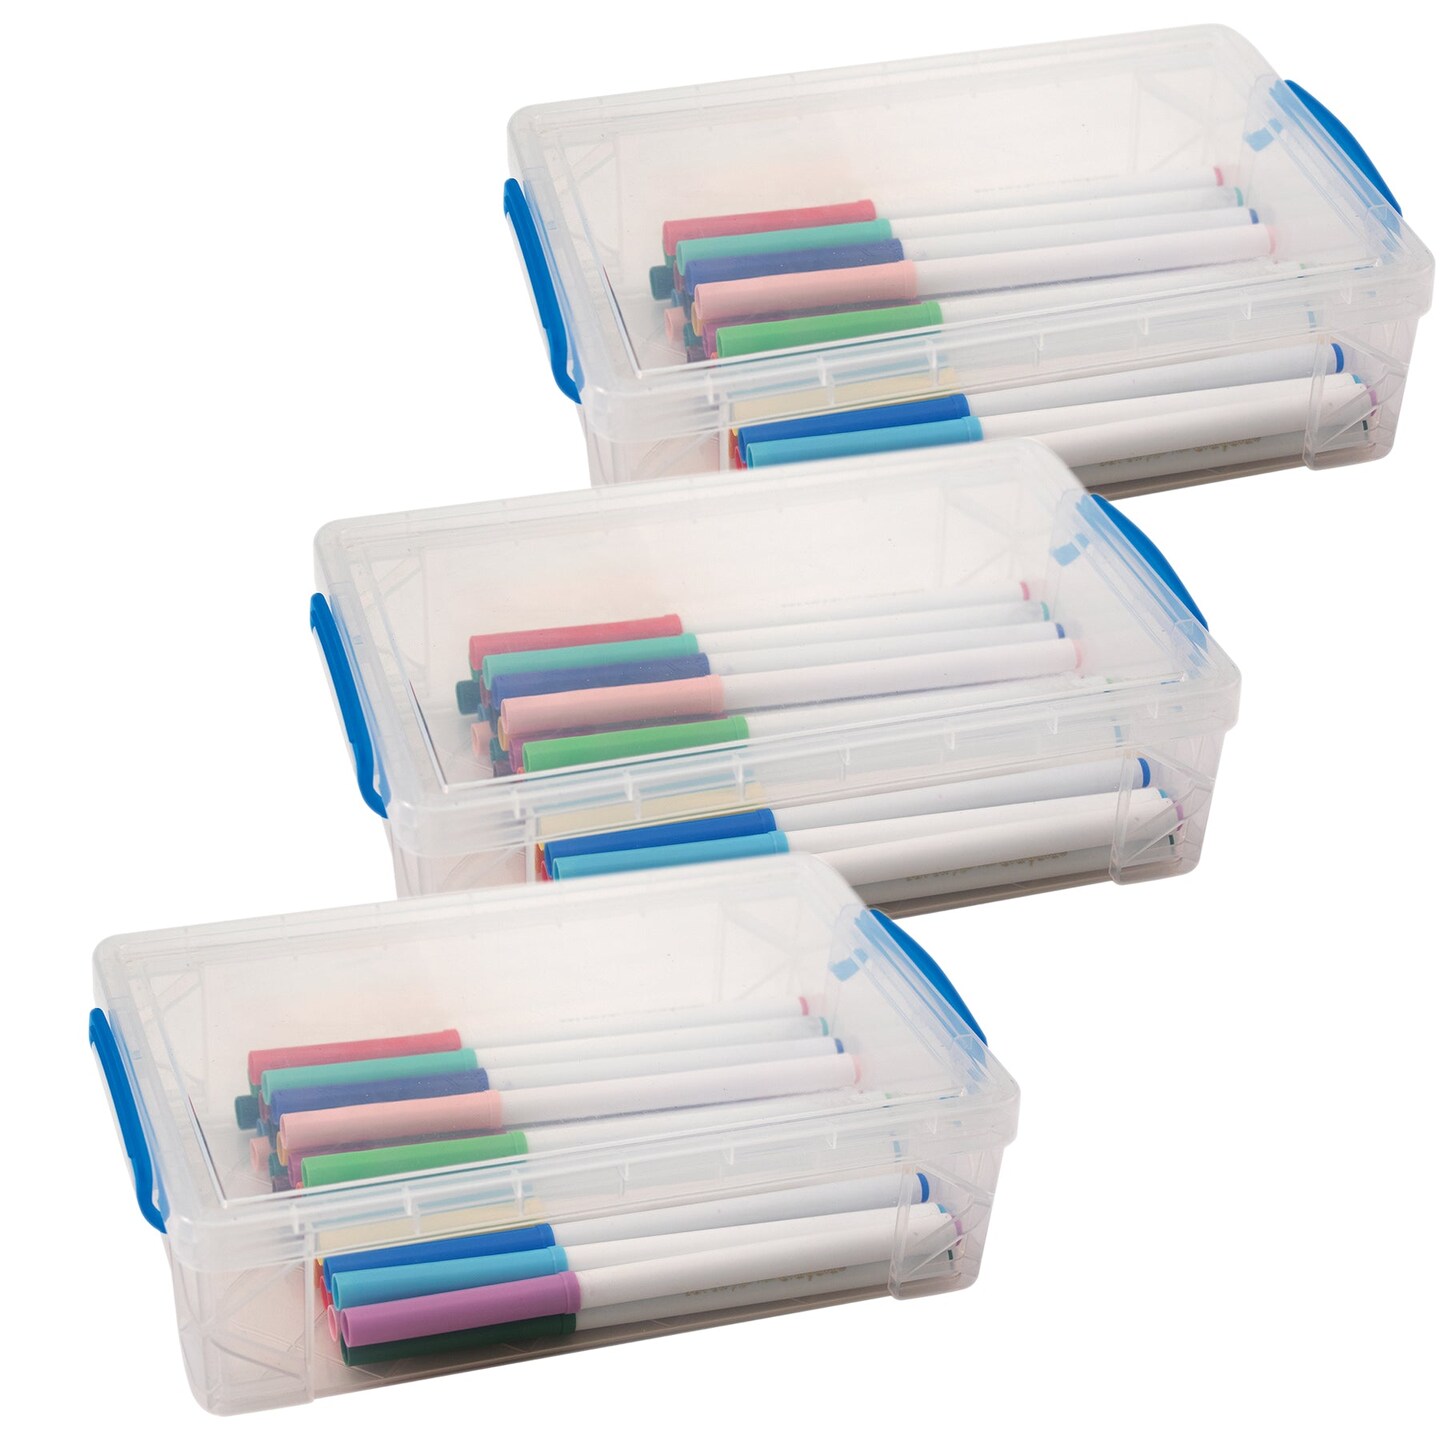 3 Pack Pencil Box, Large Capacity Plastic Pencil Case Boxes, Hard